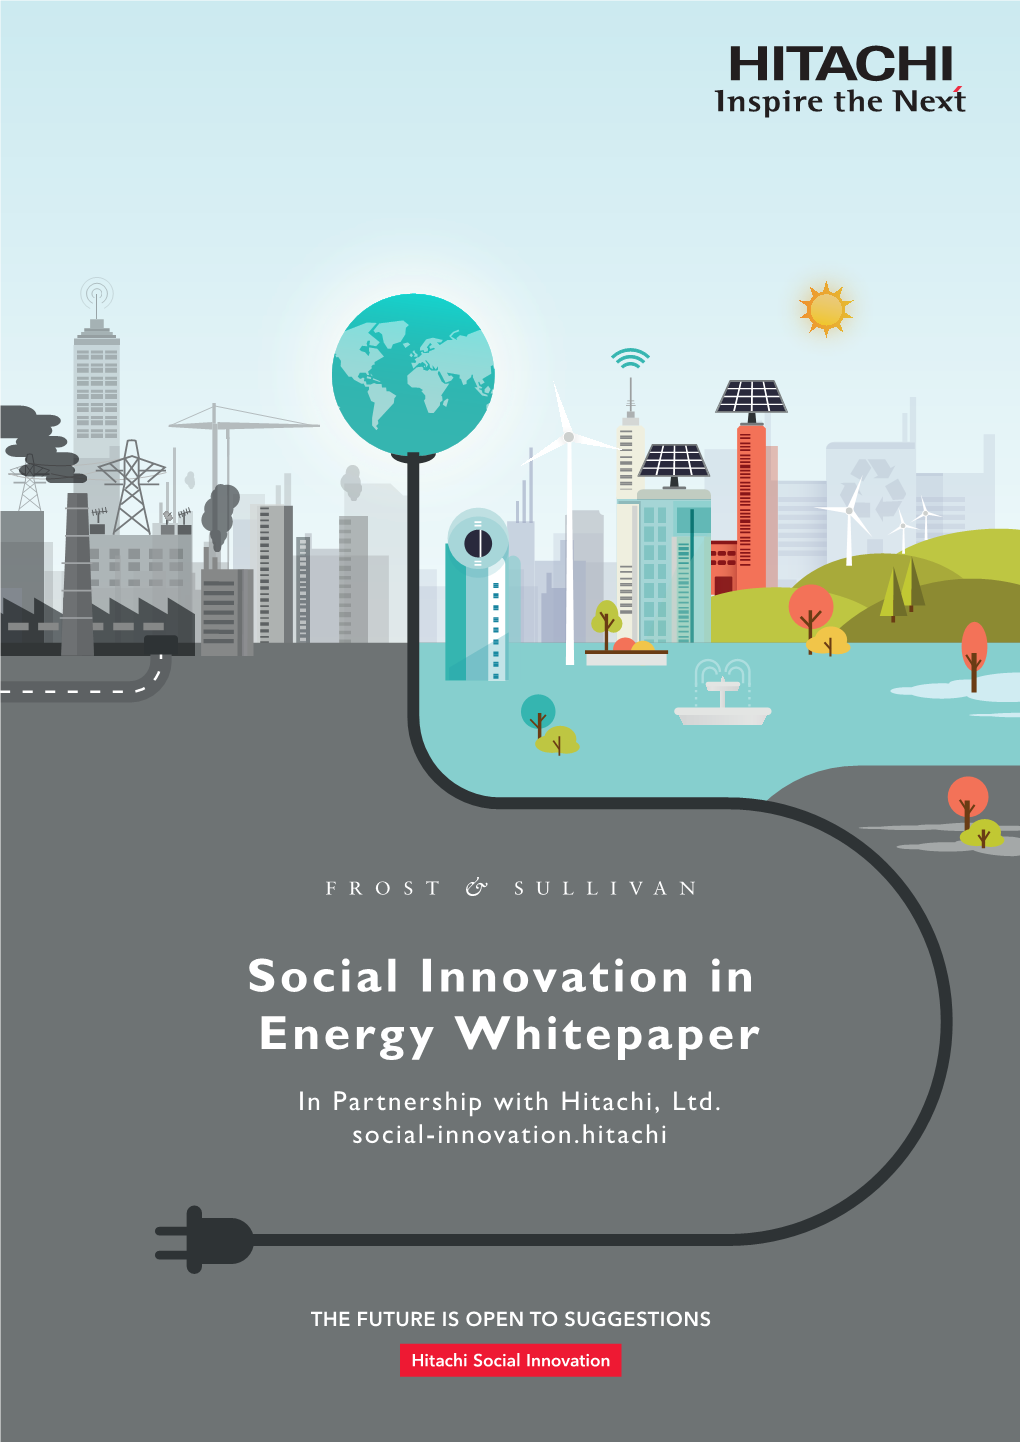 Social Innovation in Energy Whitepaper in Partnership with Hitachi, Ltd